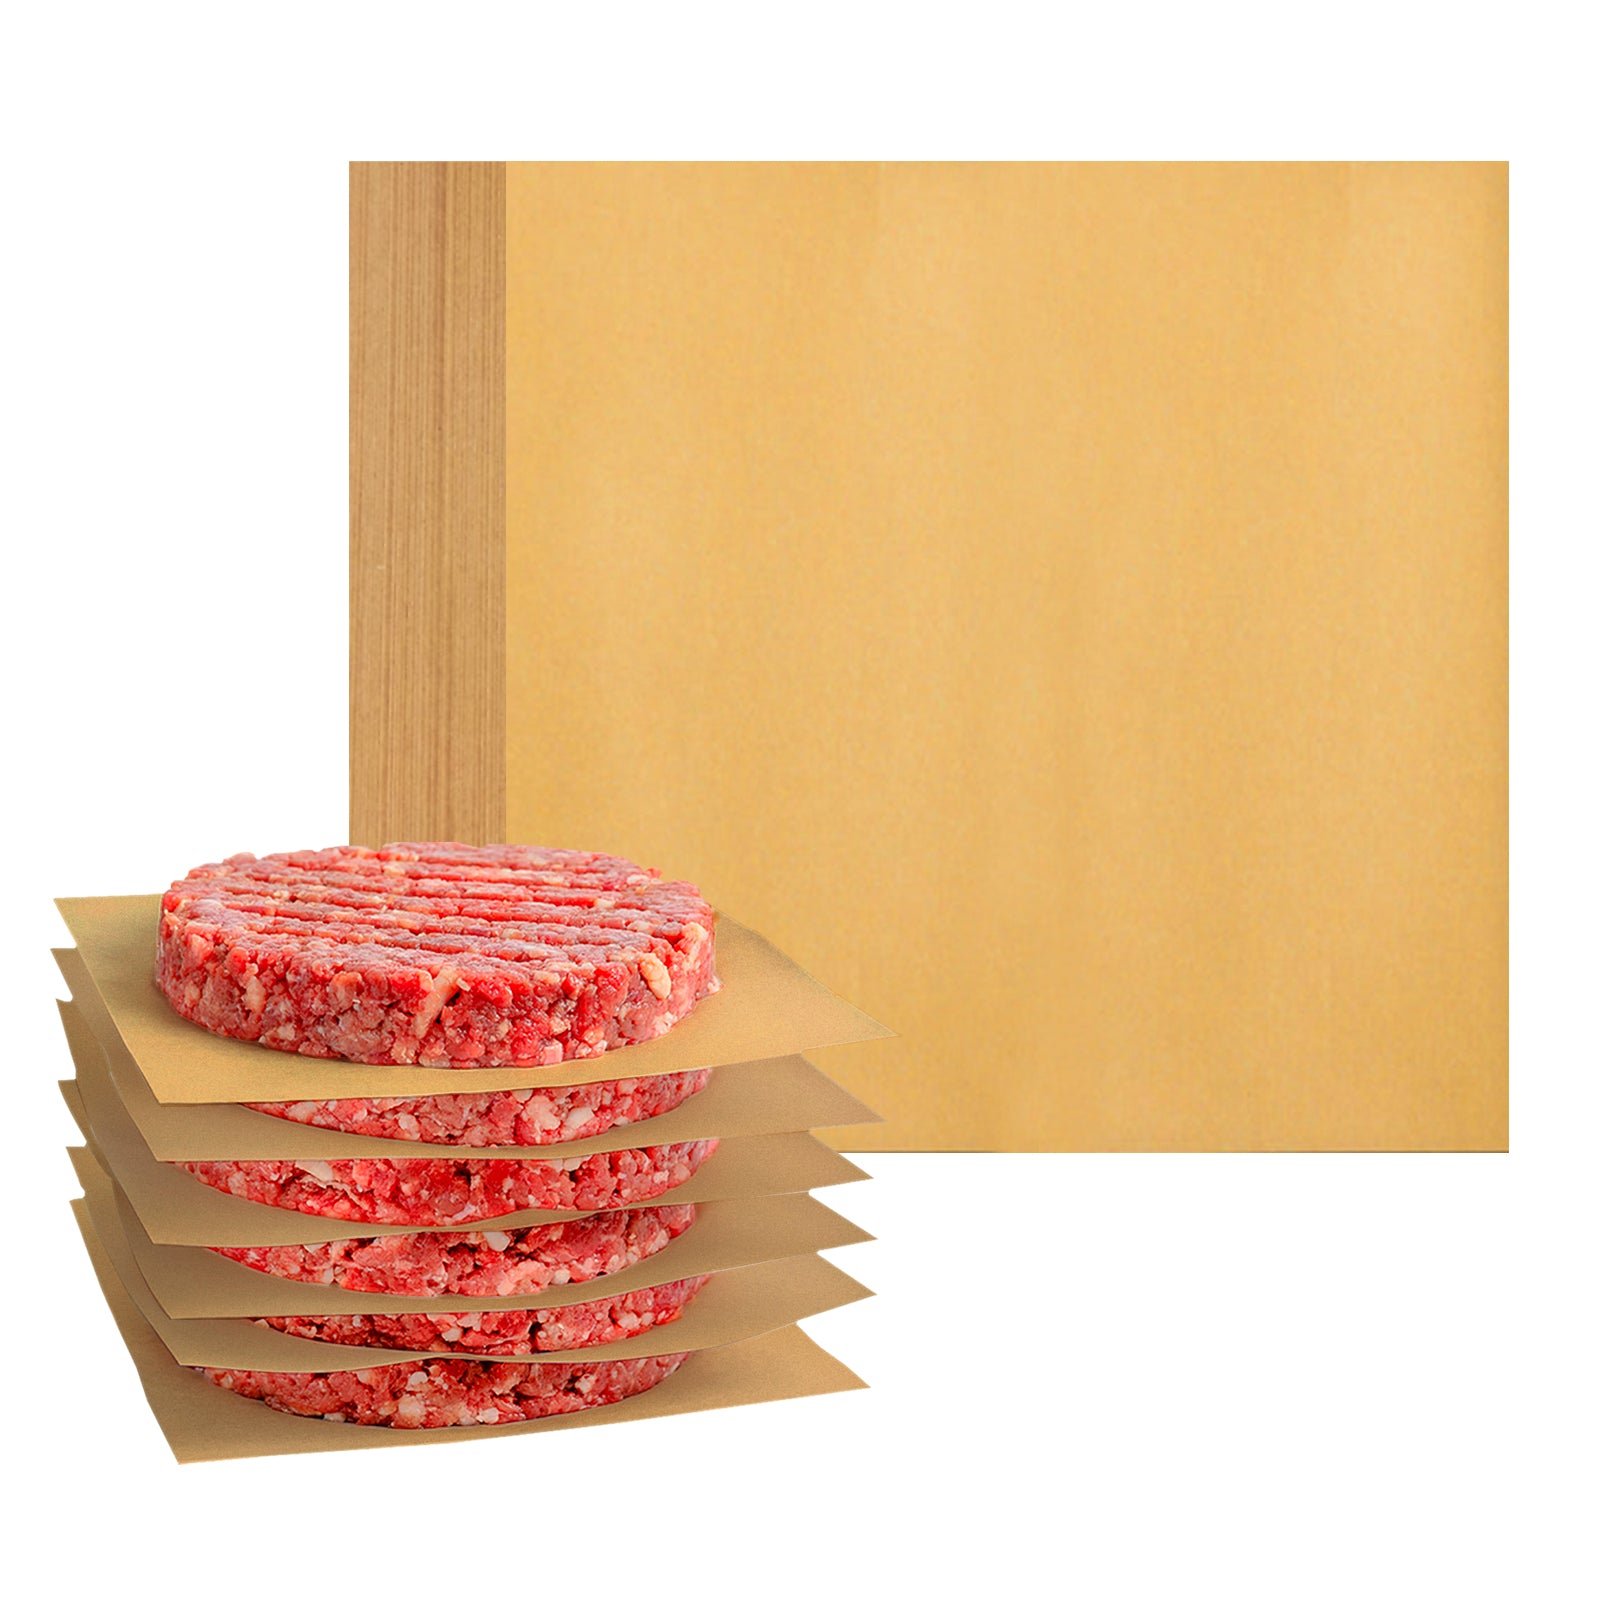 Parchment Paper Squares, 4x4 inch, Set of 300, Small Hamburger Patty Paper/Nonstick Precut Square Baking Parchment for Separating Small Burger Patty